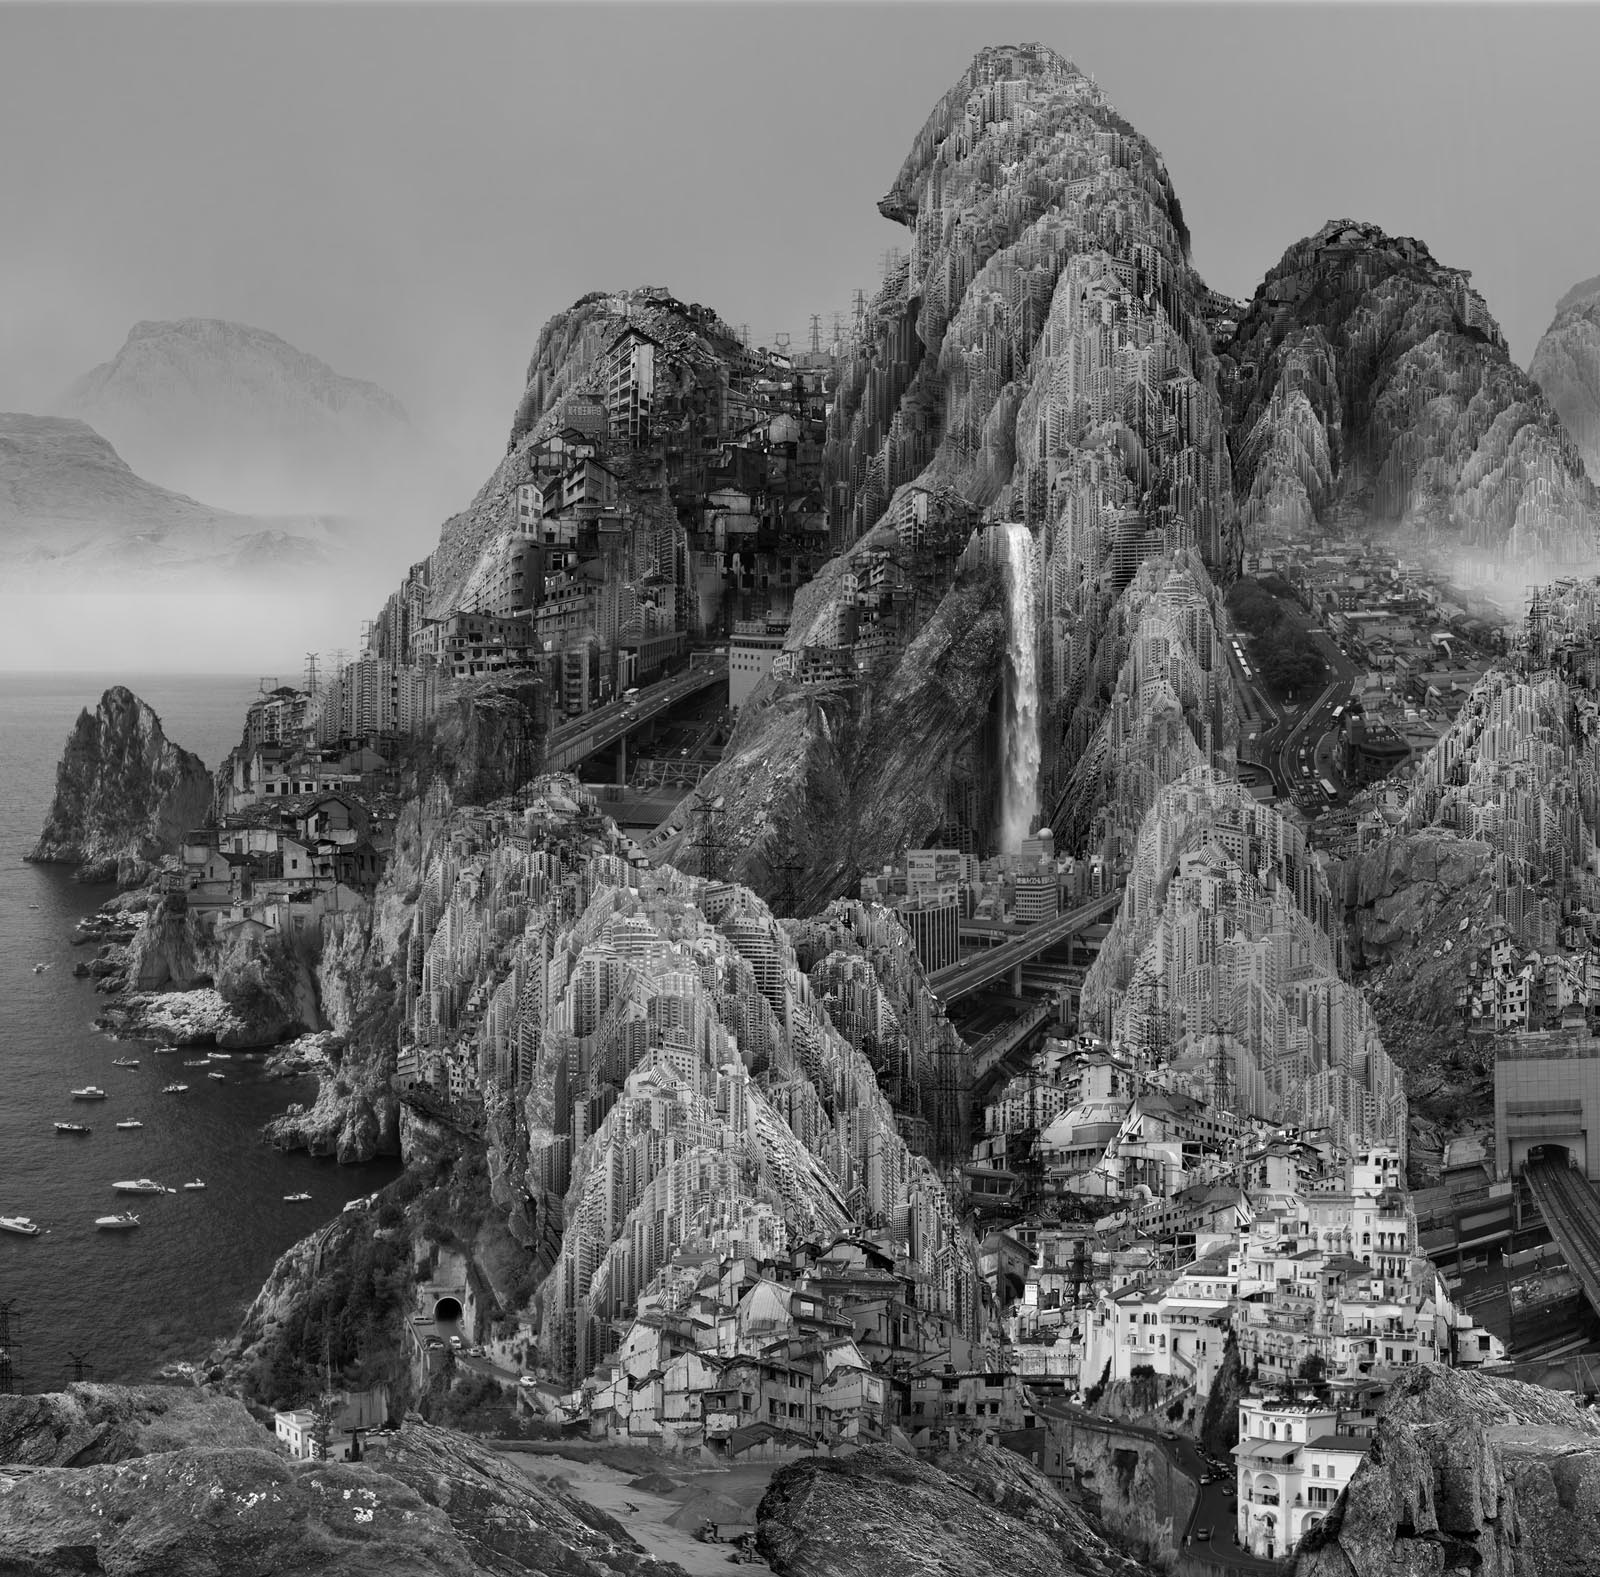 Endless Streams by Chinese artist Yang Yongliang